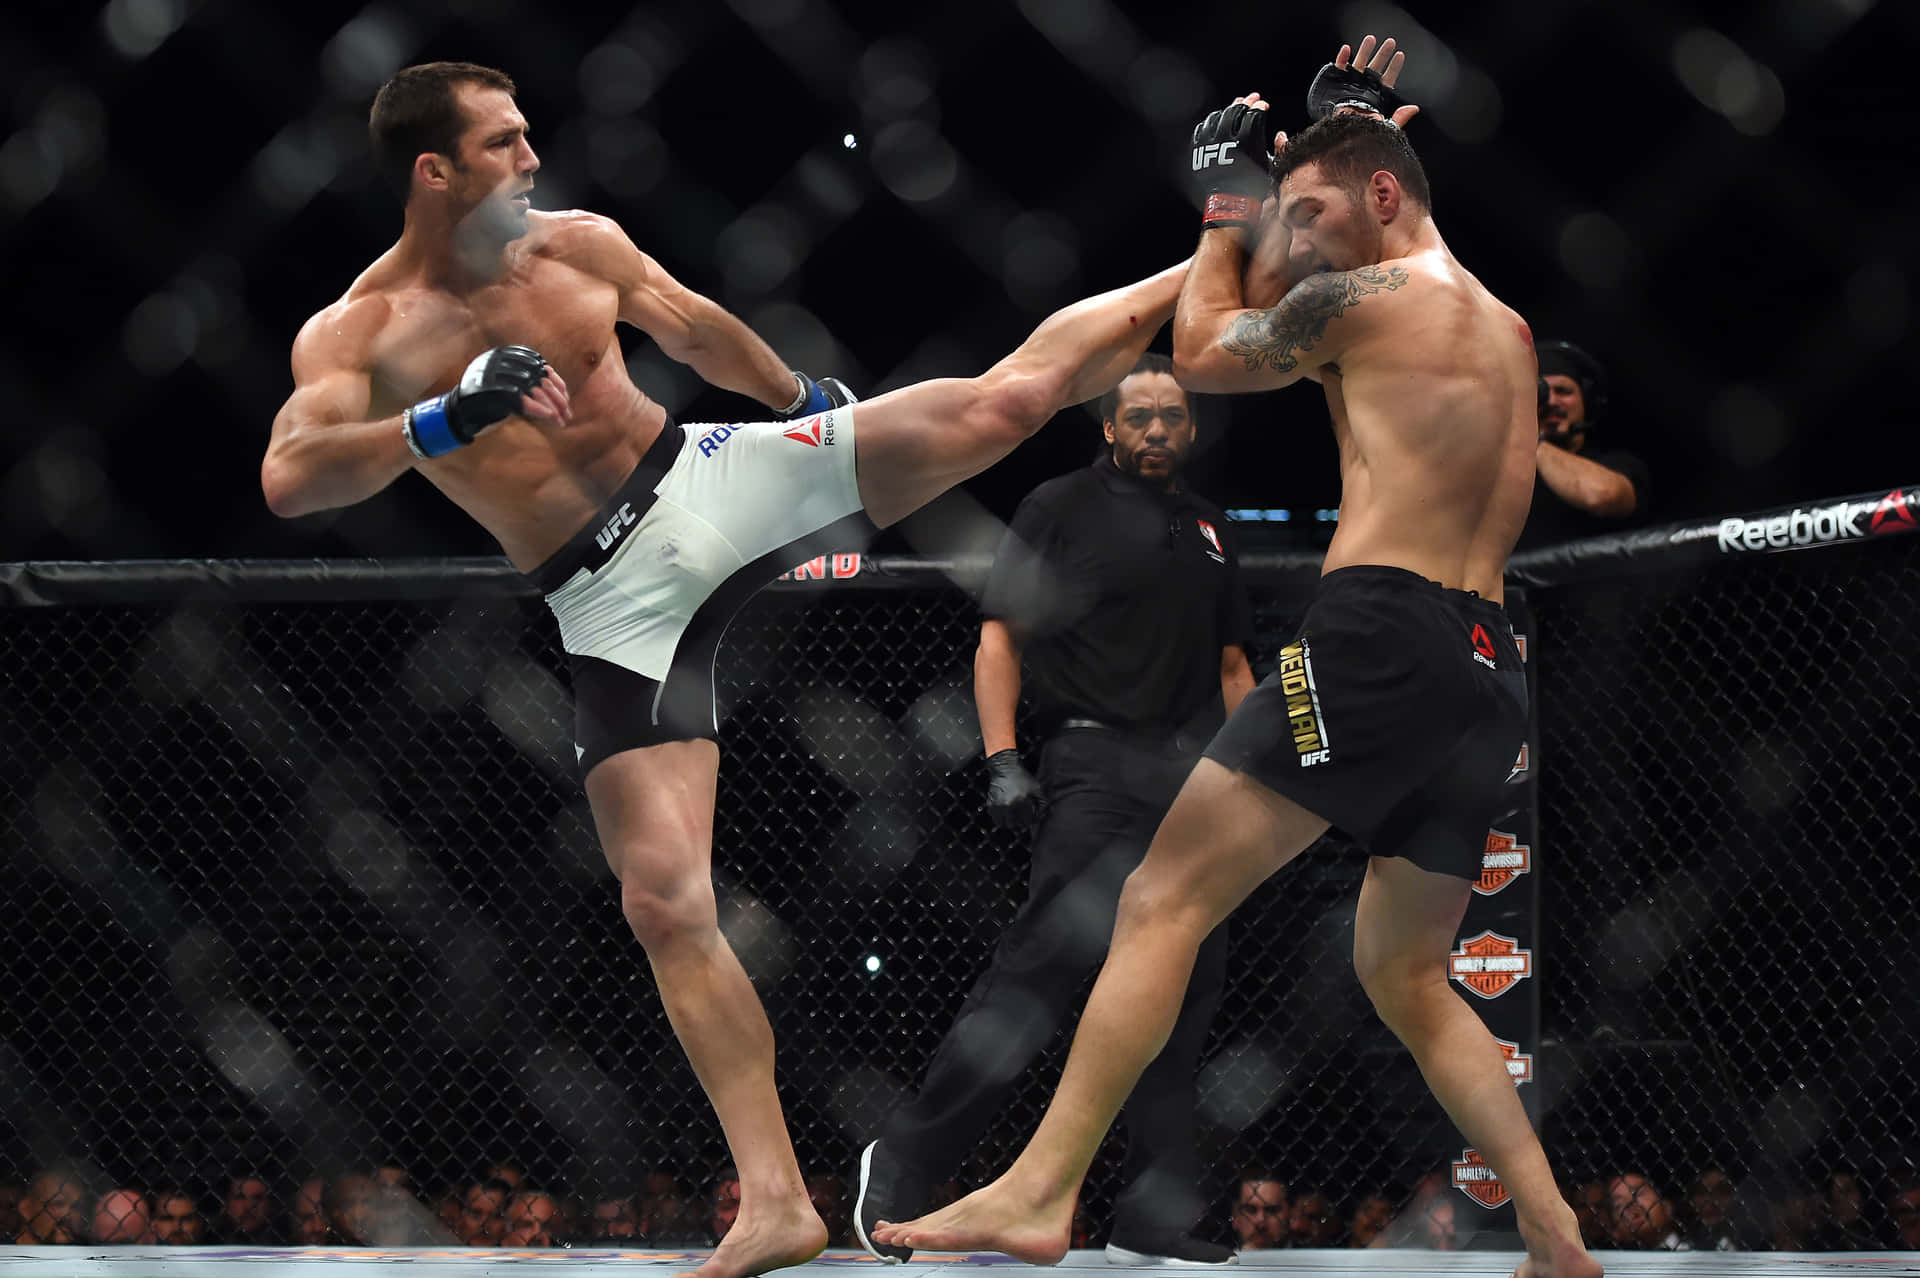 Profesionel UFC kæmper Luke Rockhold sparker Chris Weidman 2015. Wallpaper